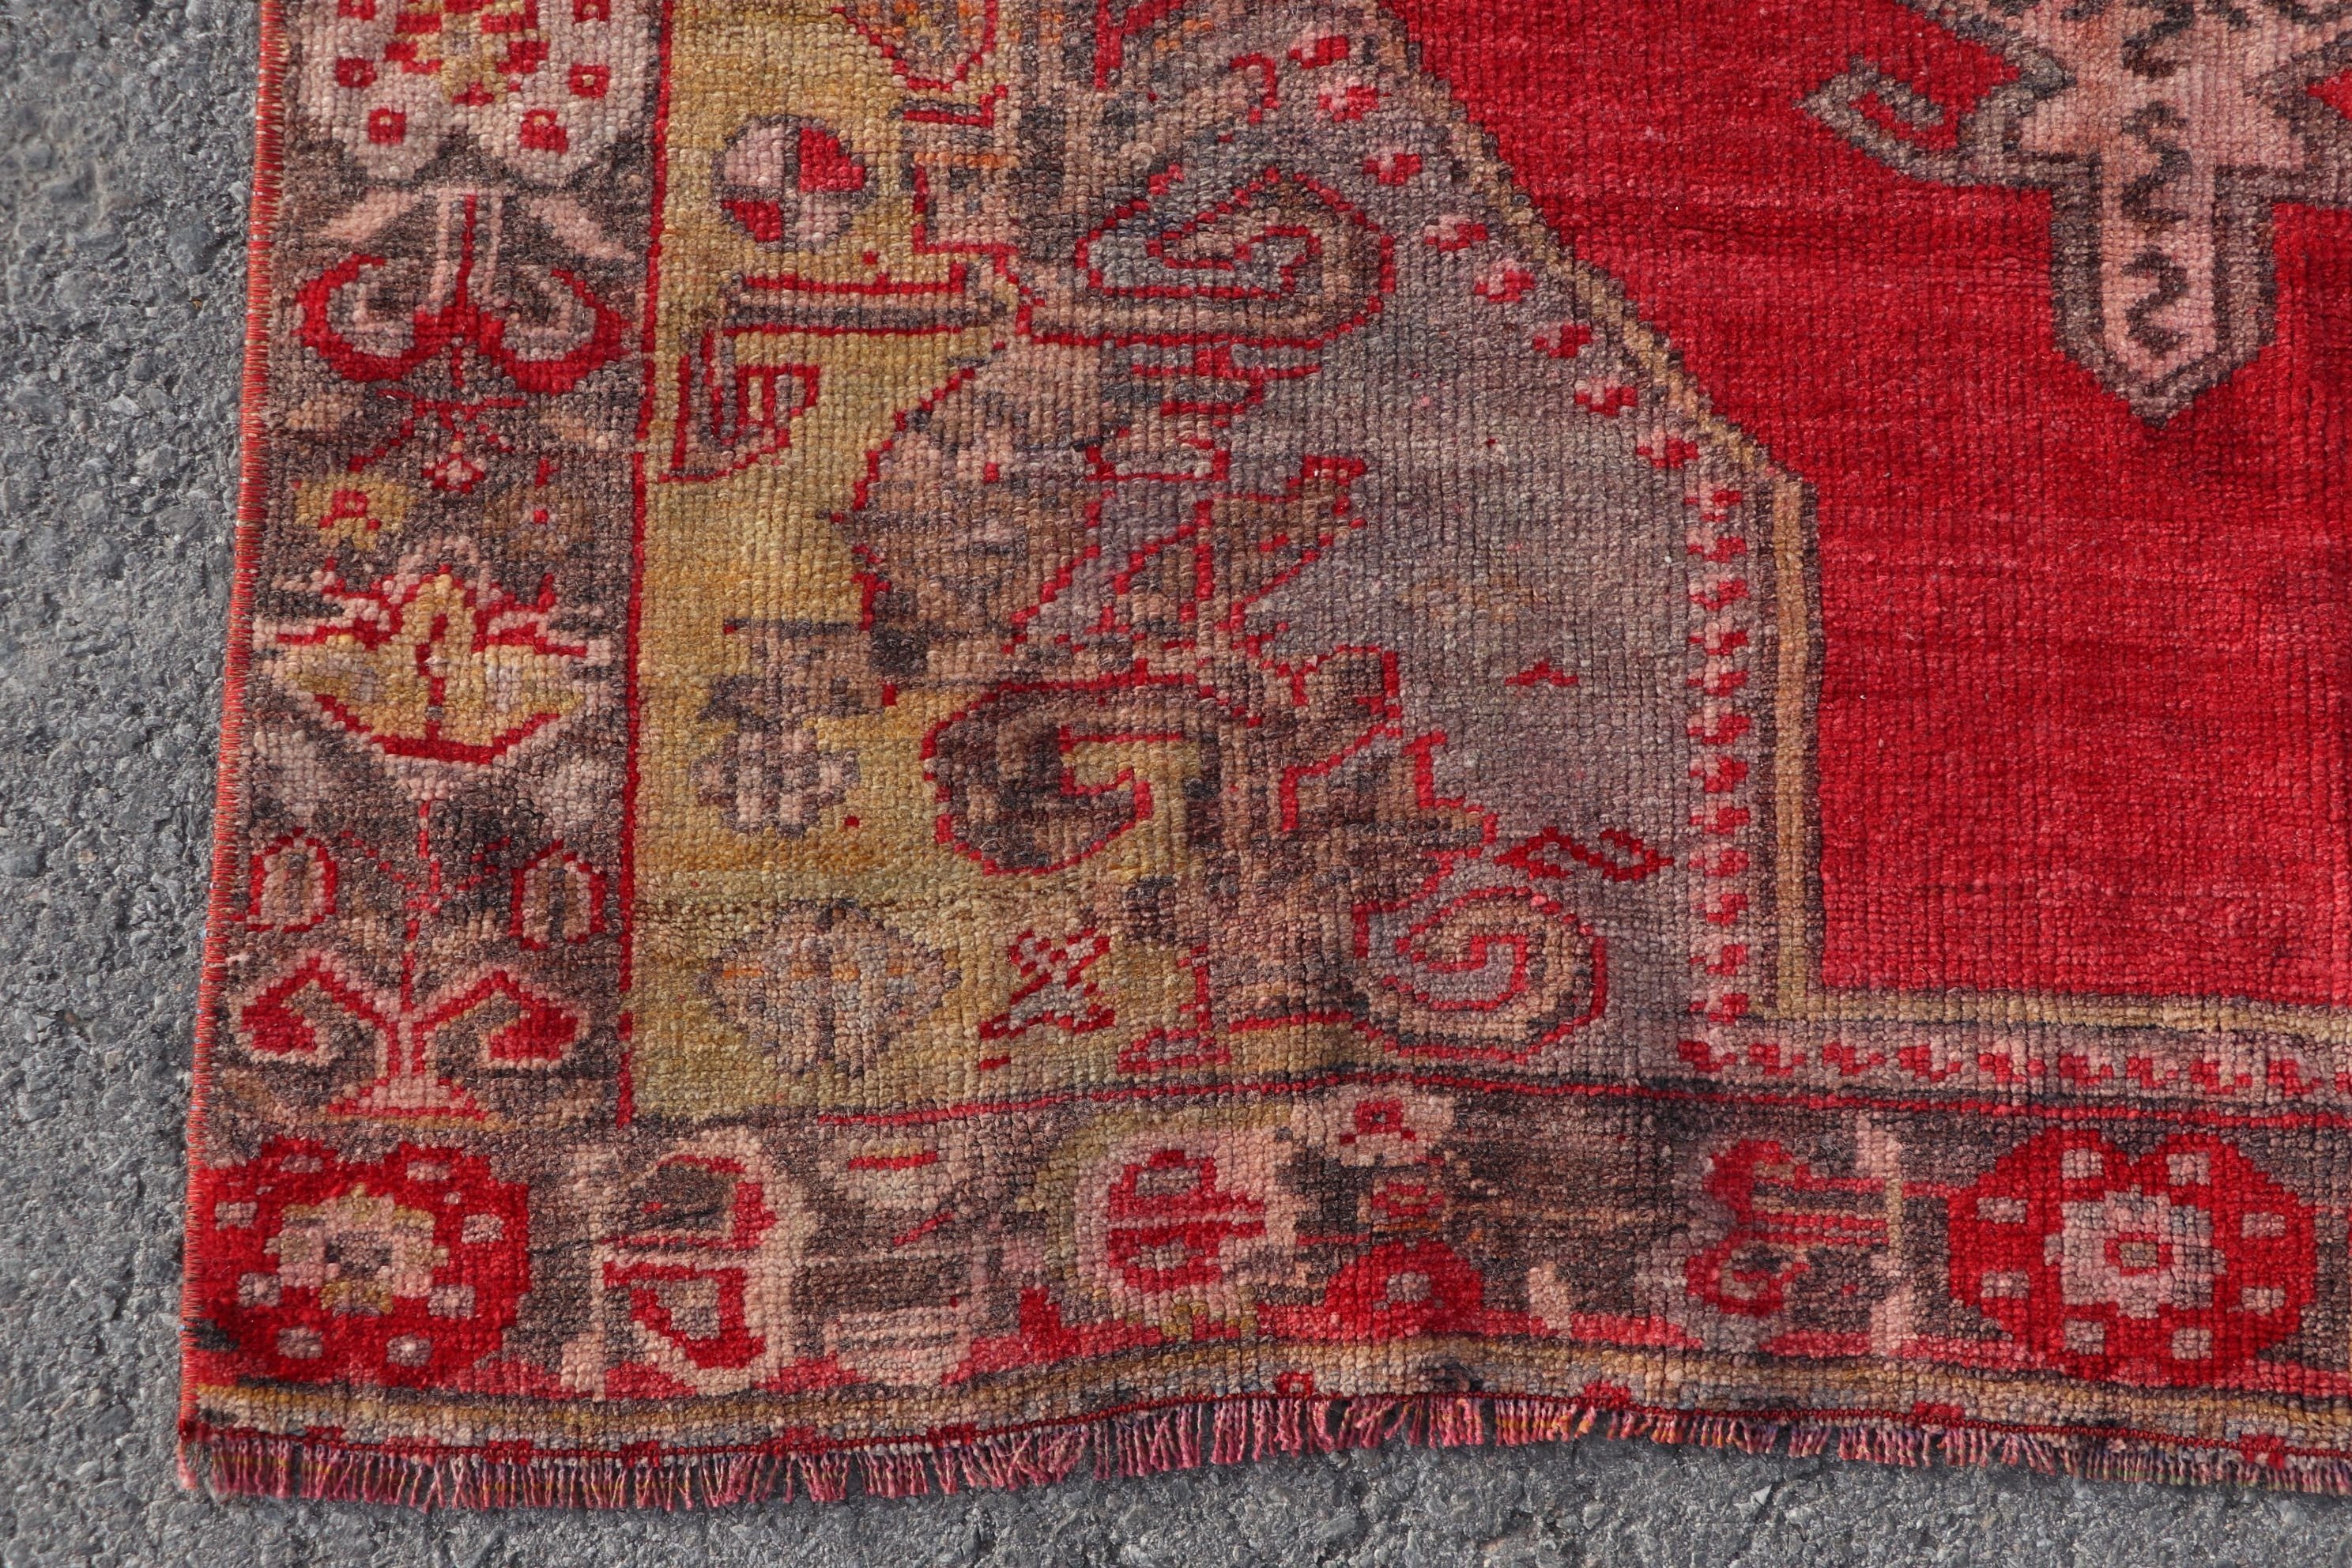 Red Oushak Rug, Oushak Rugs, Wall Hanging Rug, Vintage Rug, Anatolian Rug, 3.9x2.7 ft Small Rugs, Turkish Rugs, Door Mat Rug, Tribal Rug